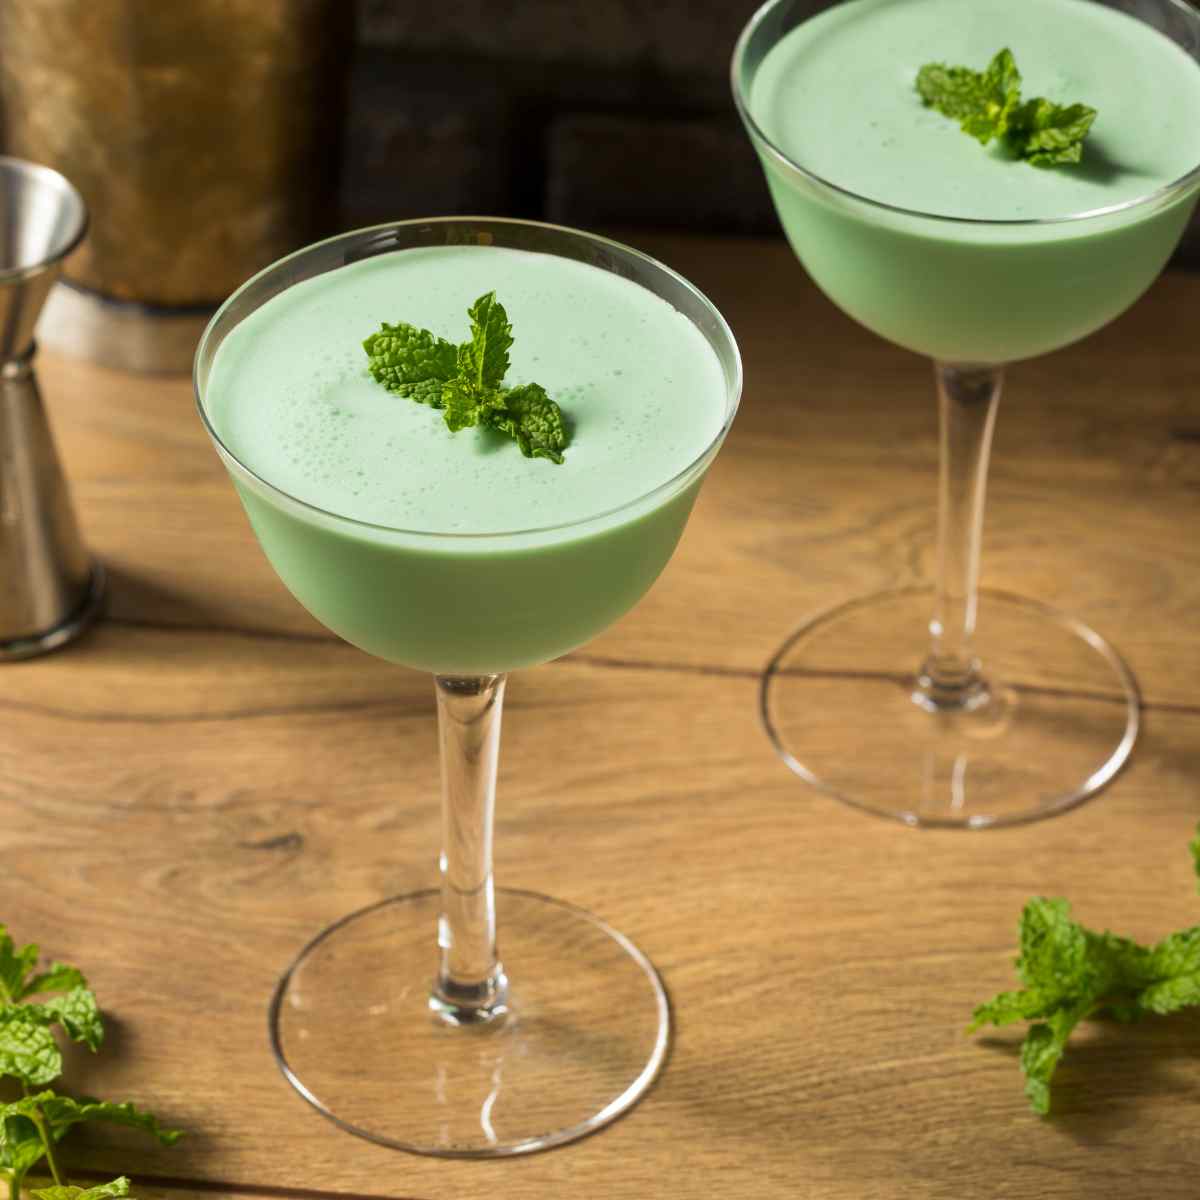 Two Crème de Menthe cocktails on wooden table next to fresh mint leaves